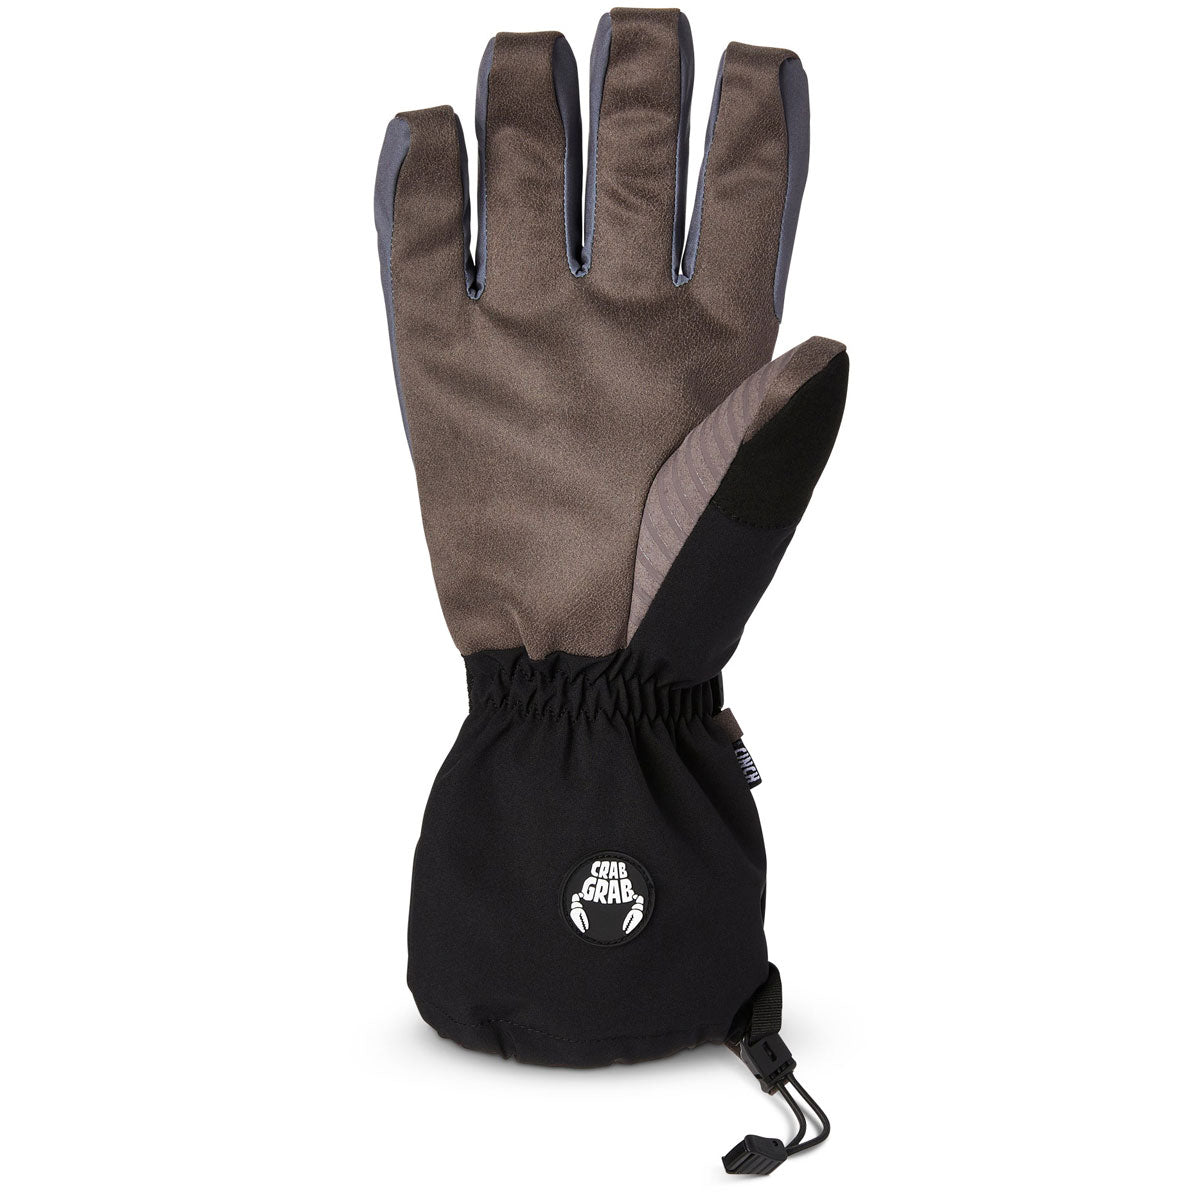 Crab Grab Cinch Snowboard Gloves - Black/Grey image 2